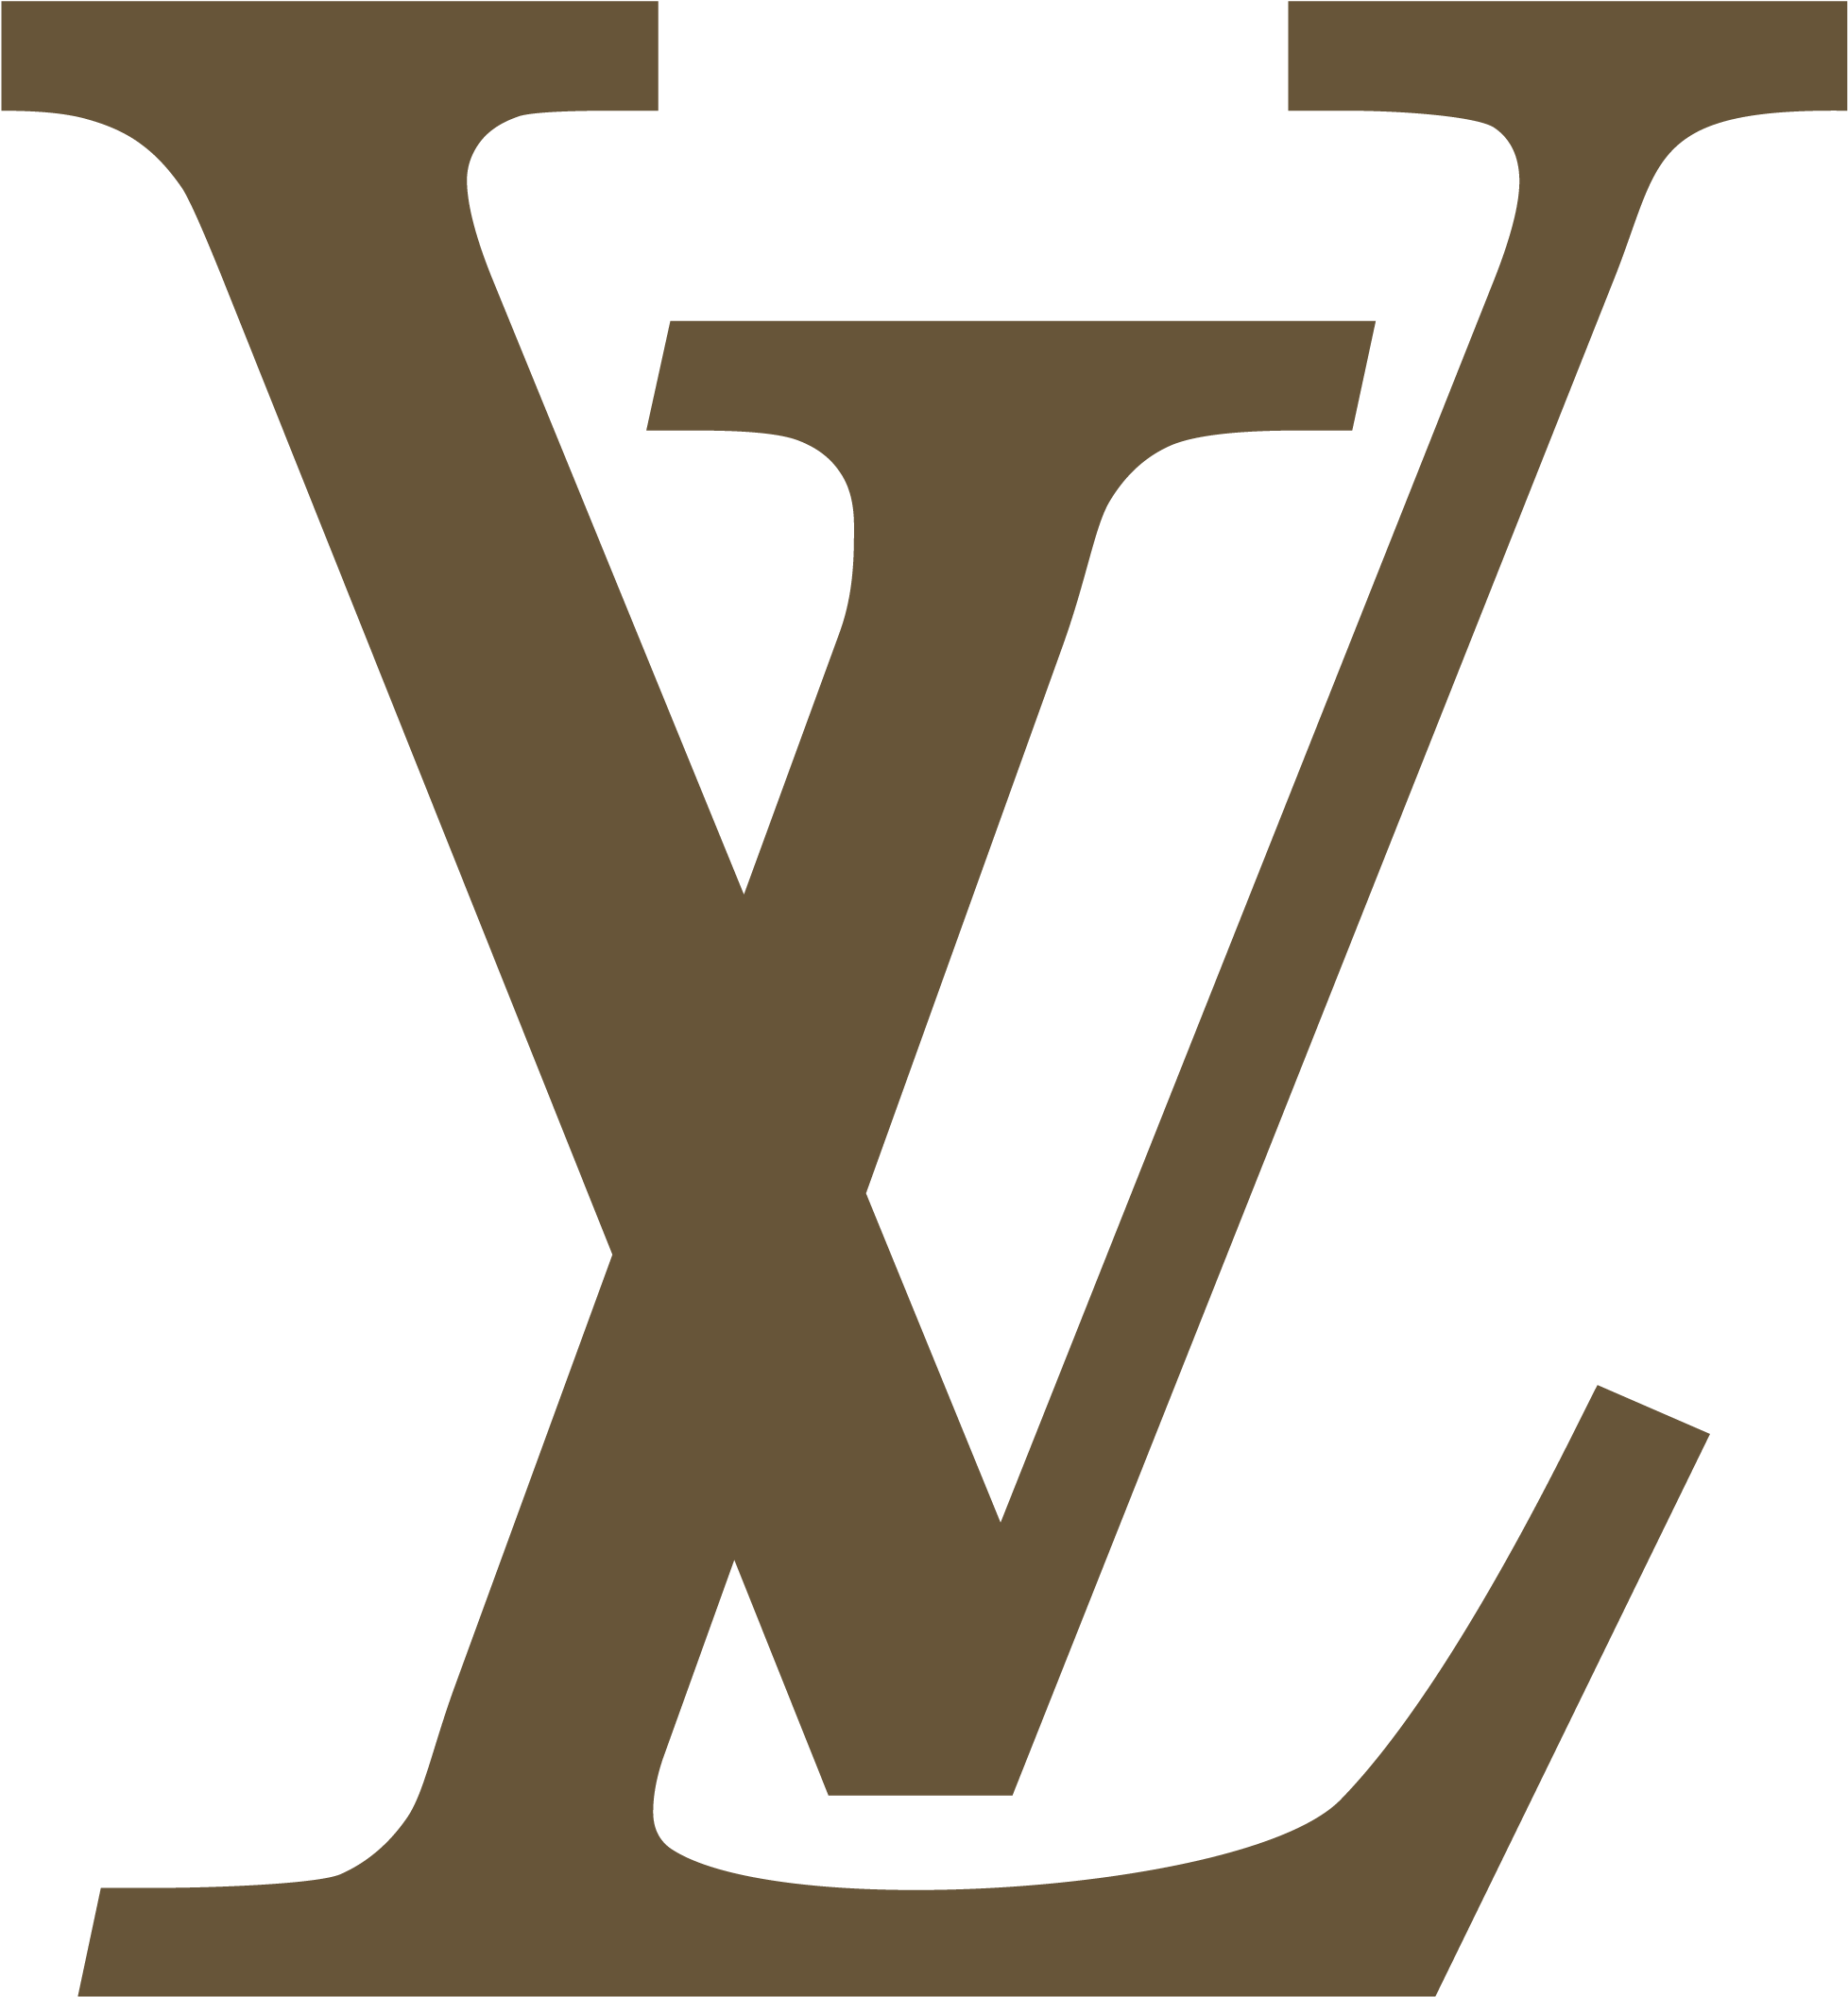 Lv Printable Logo - Printable Word Searches